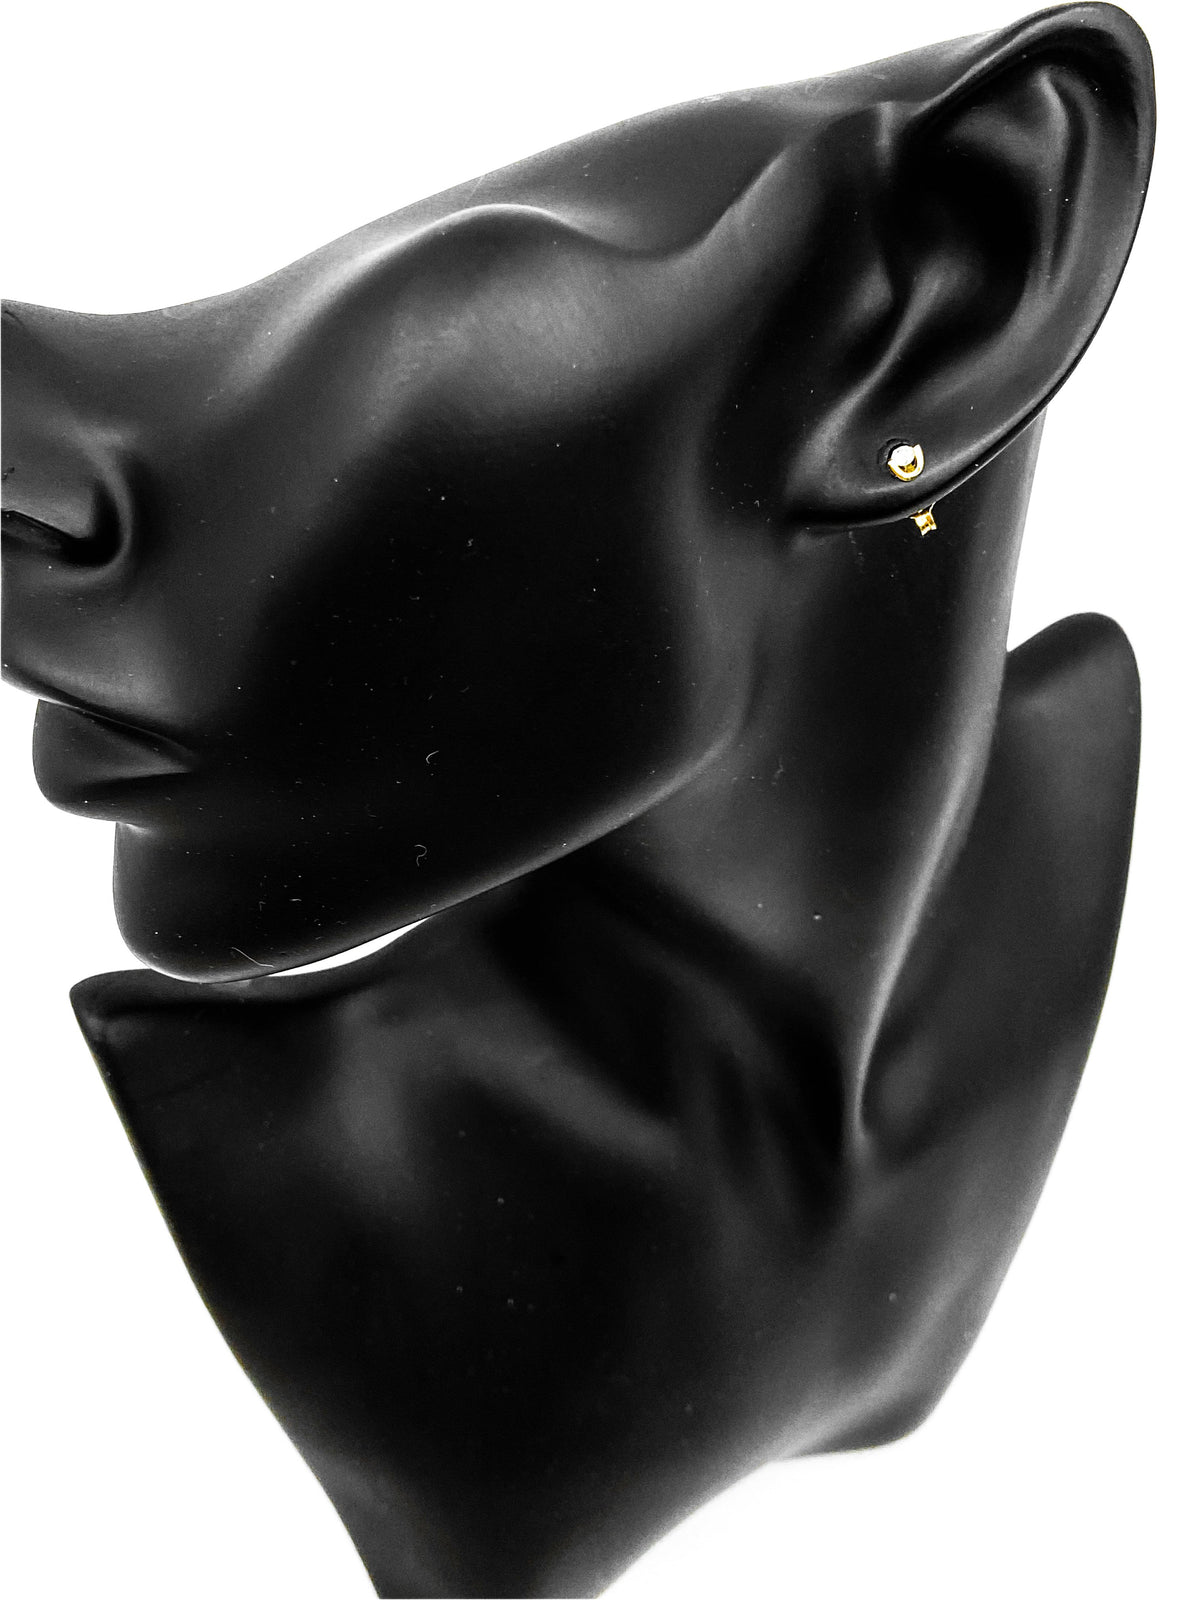 14K Yellow Gold 0.12cttw Canadian Diamond Meza Luna Earring Stud with Screw Backs